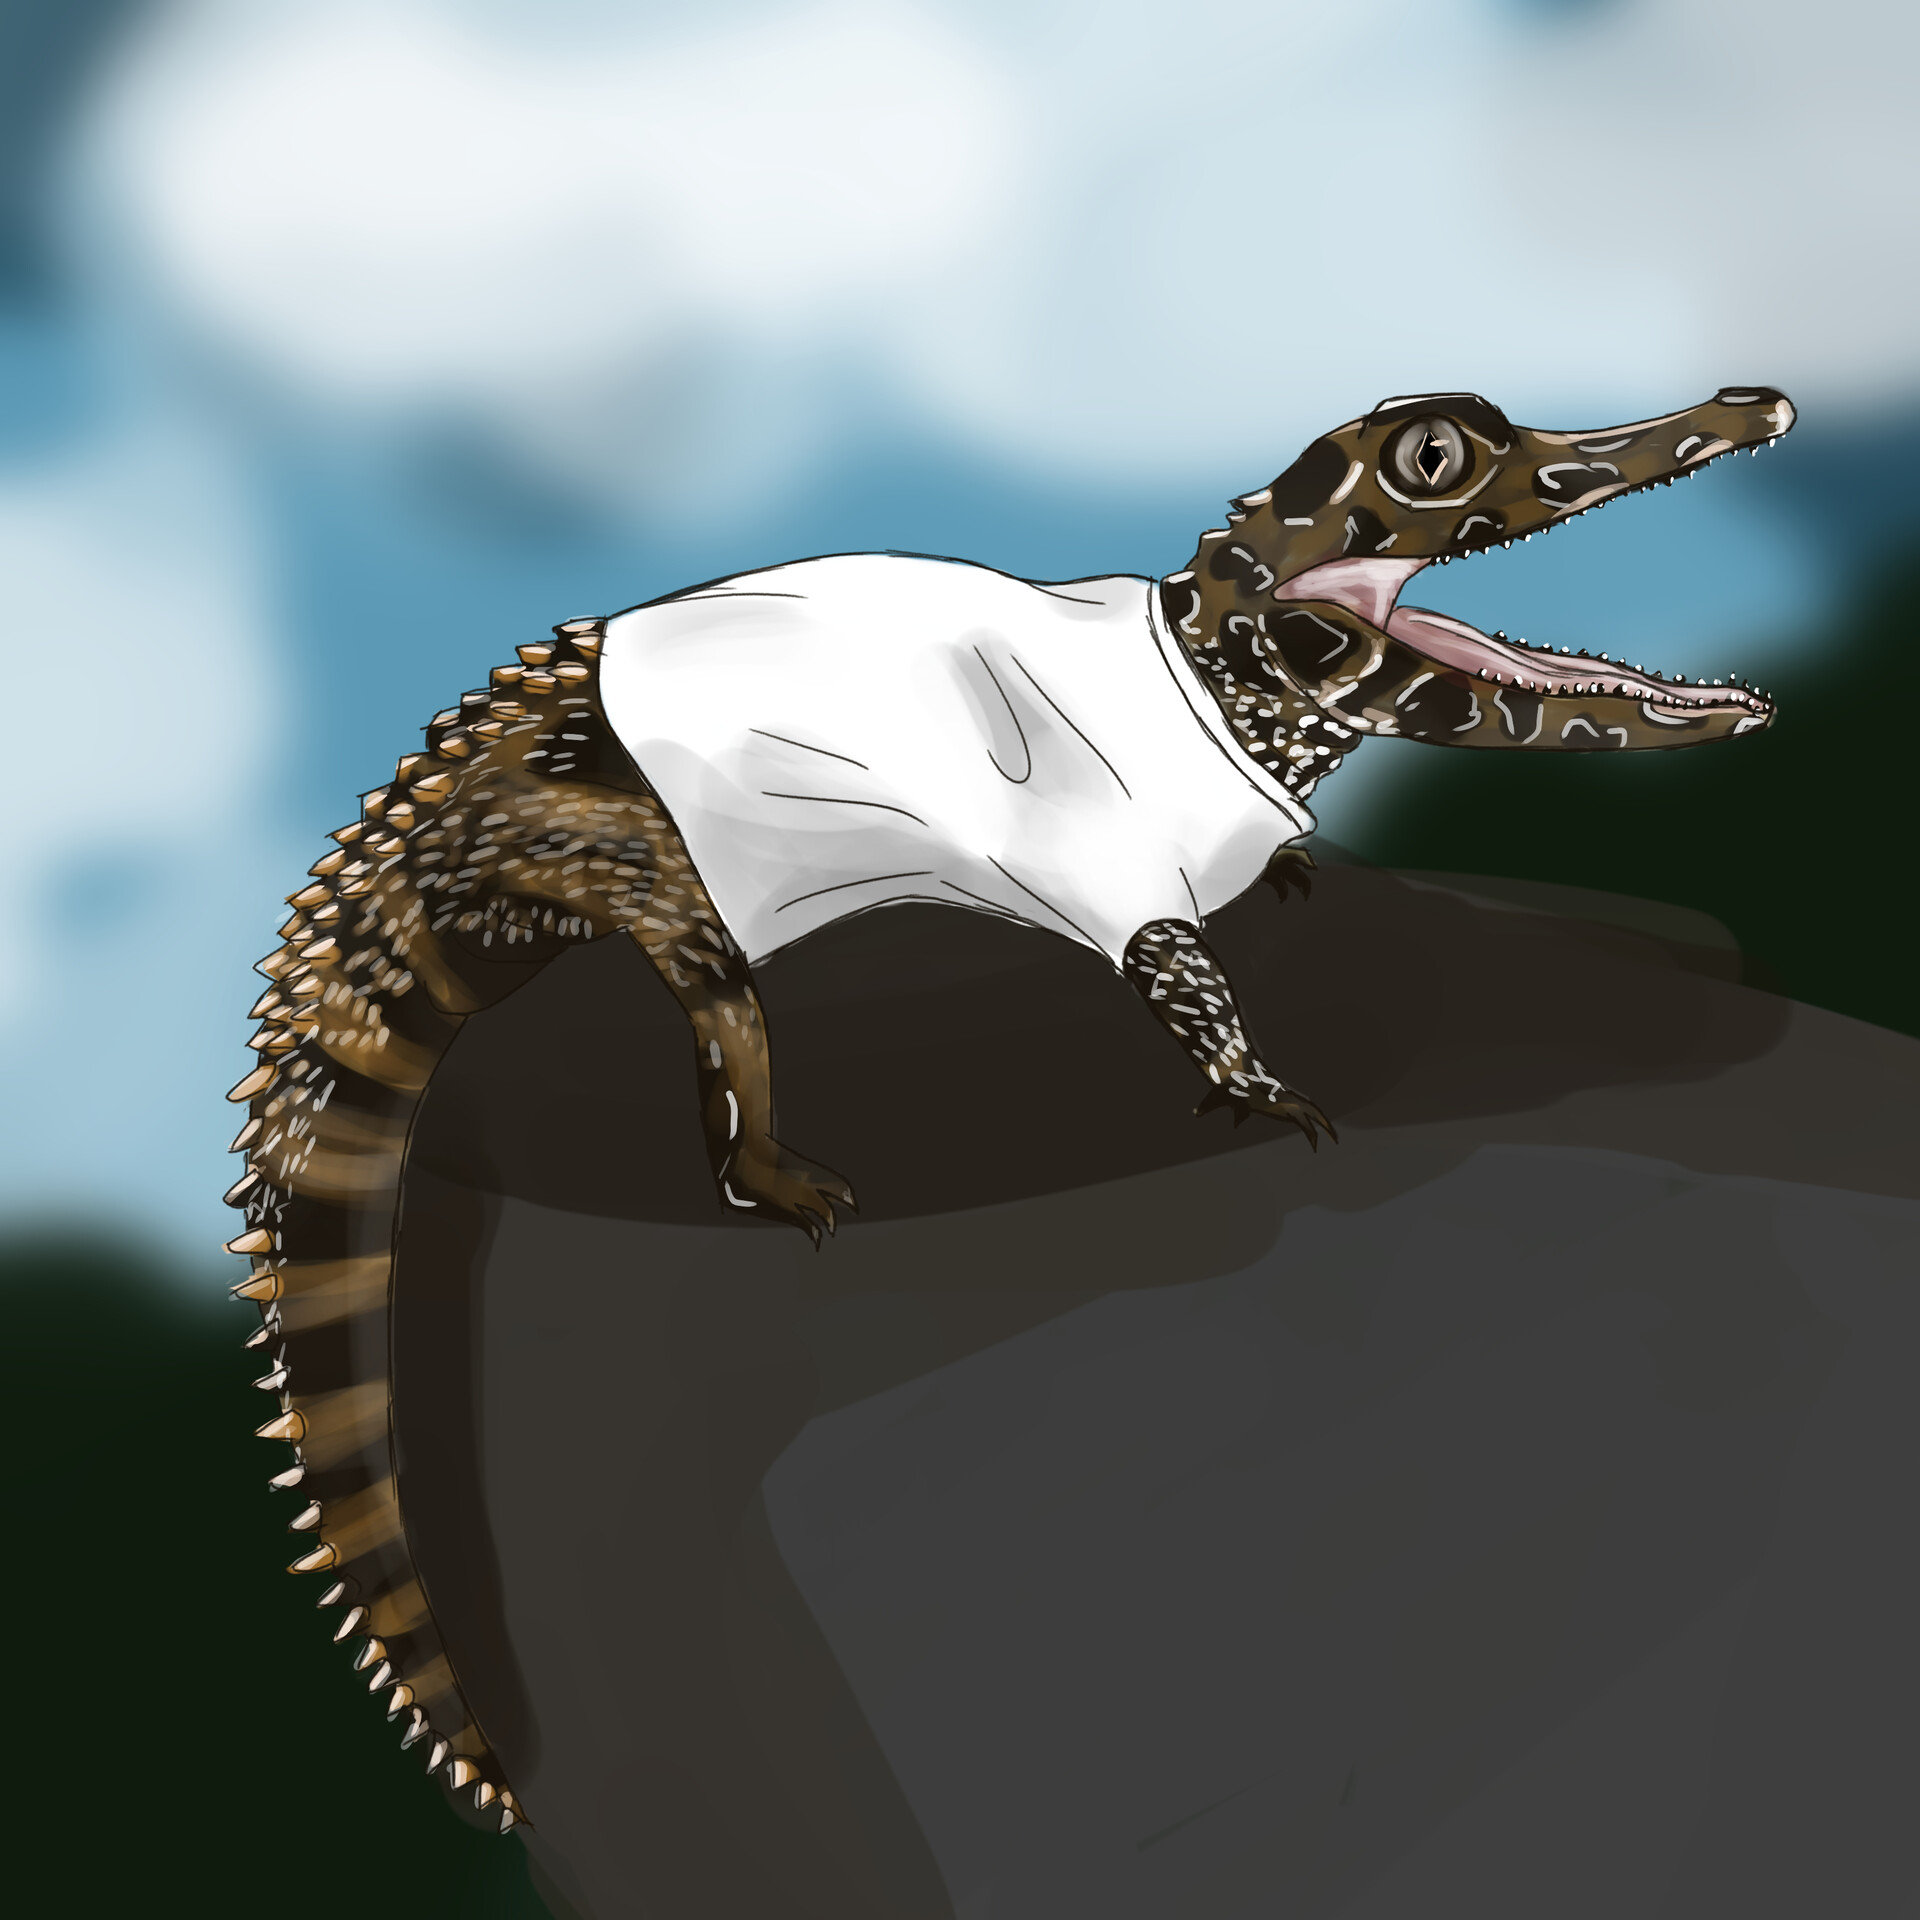 Mini Alligator in a T-shirt by Art_by_spicyjahu